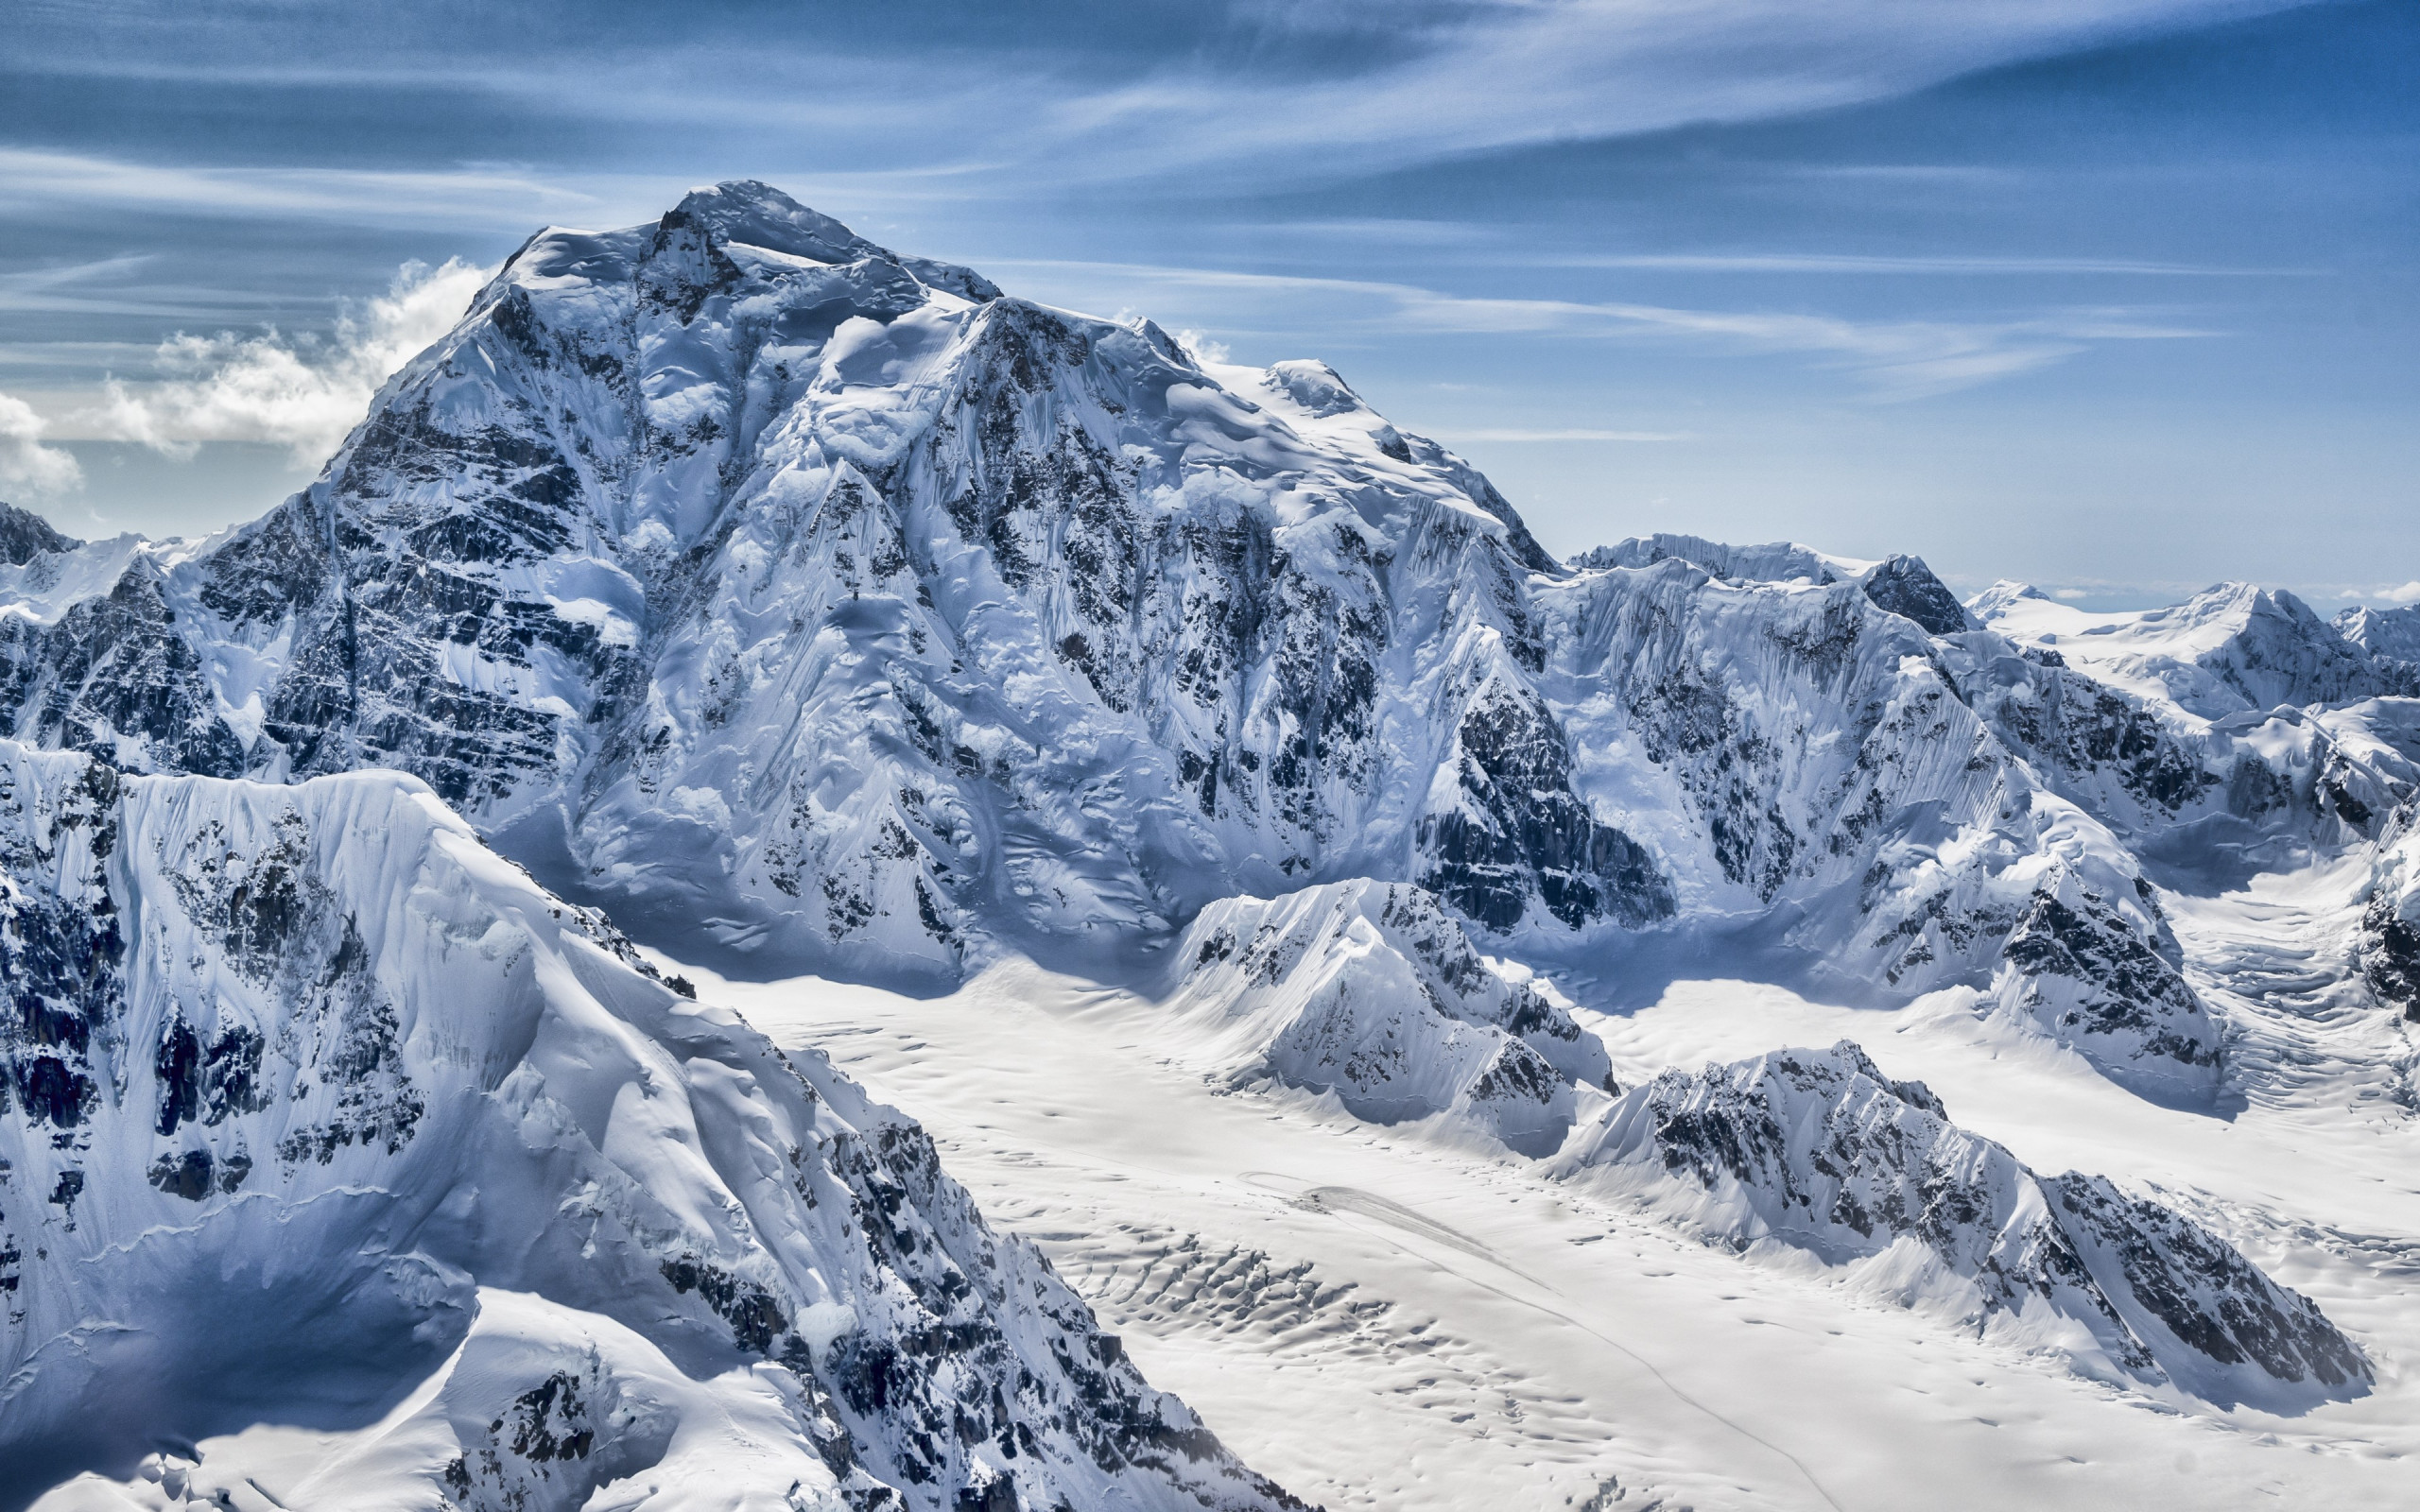 Mountain peak from Alaska wallpaper 2560x1600